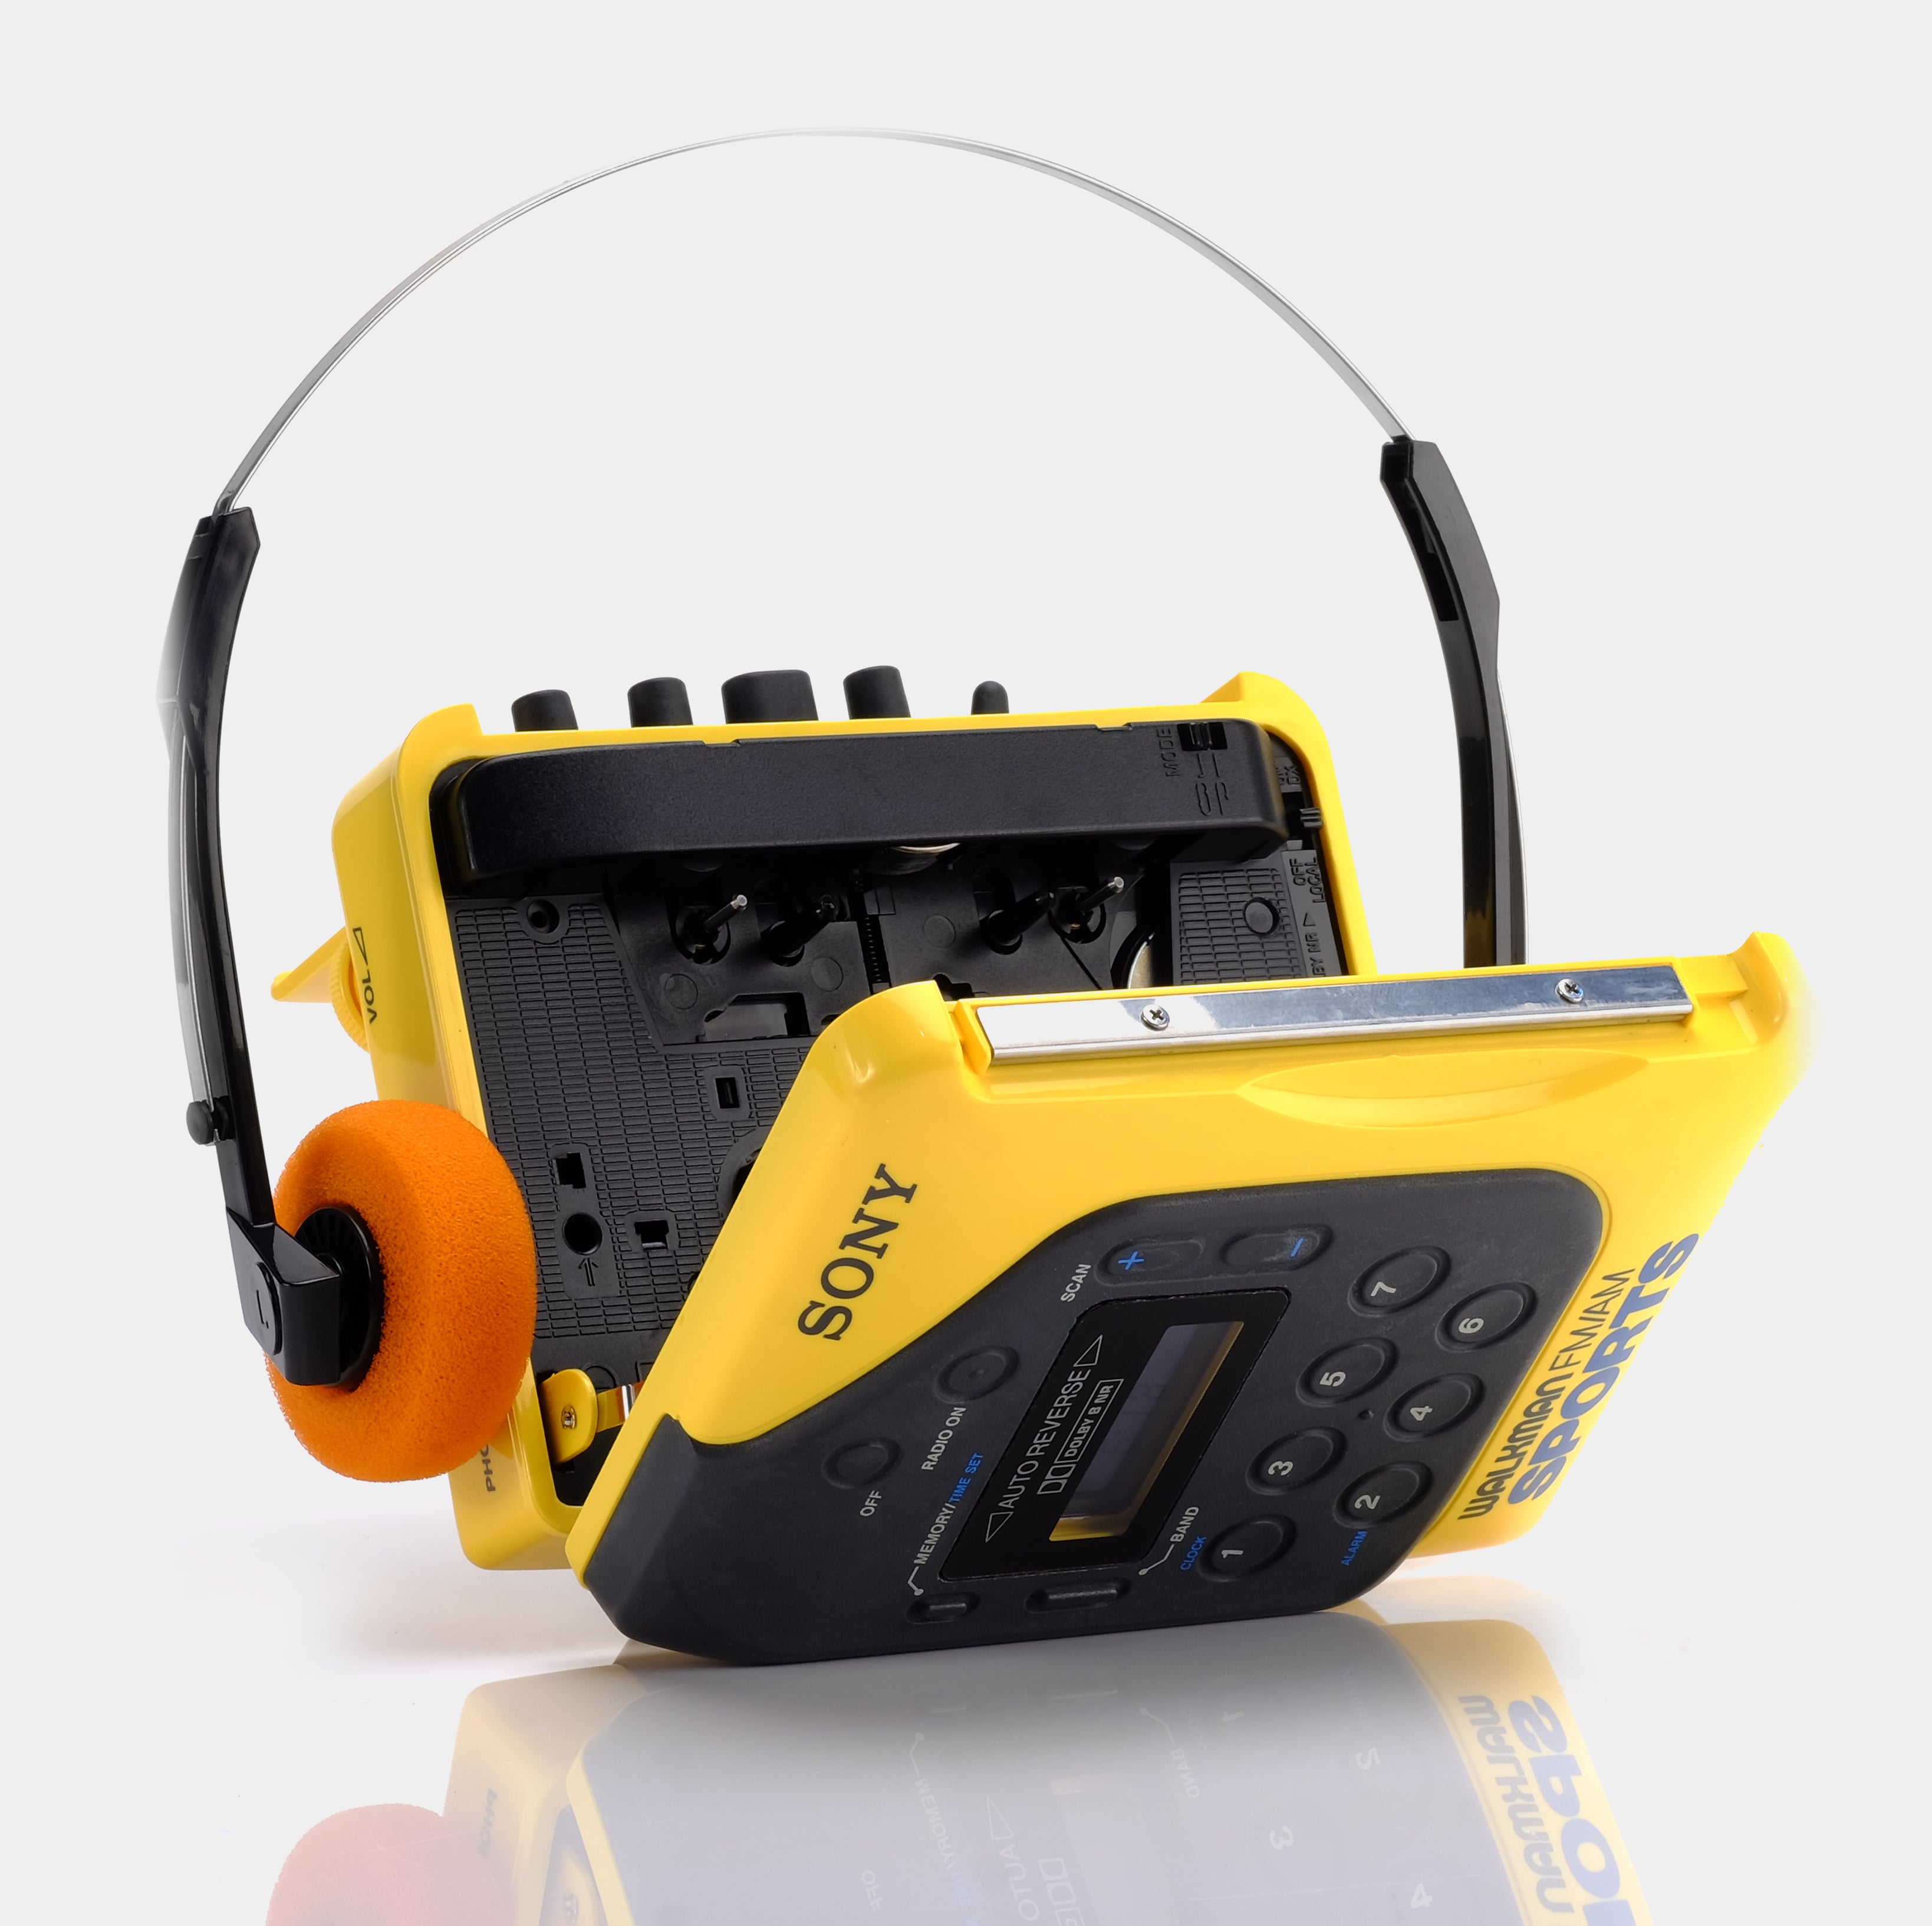 Sony Sports Walkman WM-F2078 Yellow AM/FM Portable Cassette Player